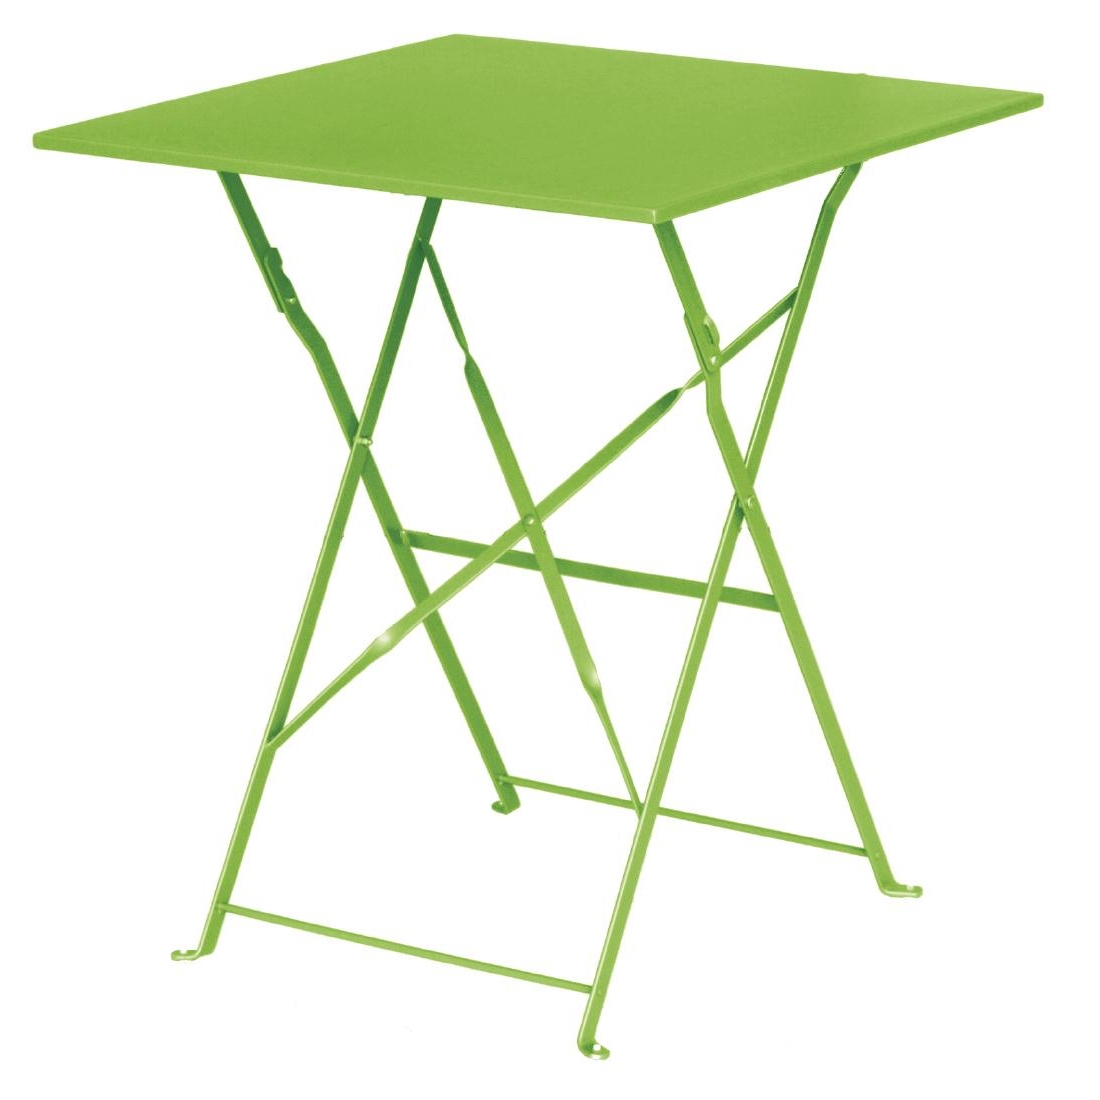 Pavement Table – The Parisian – Green